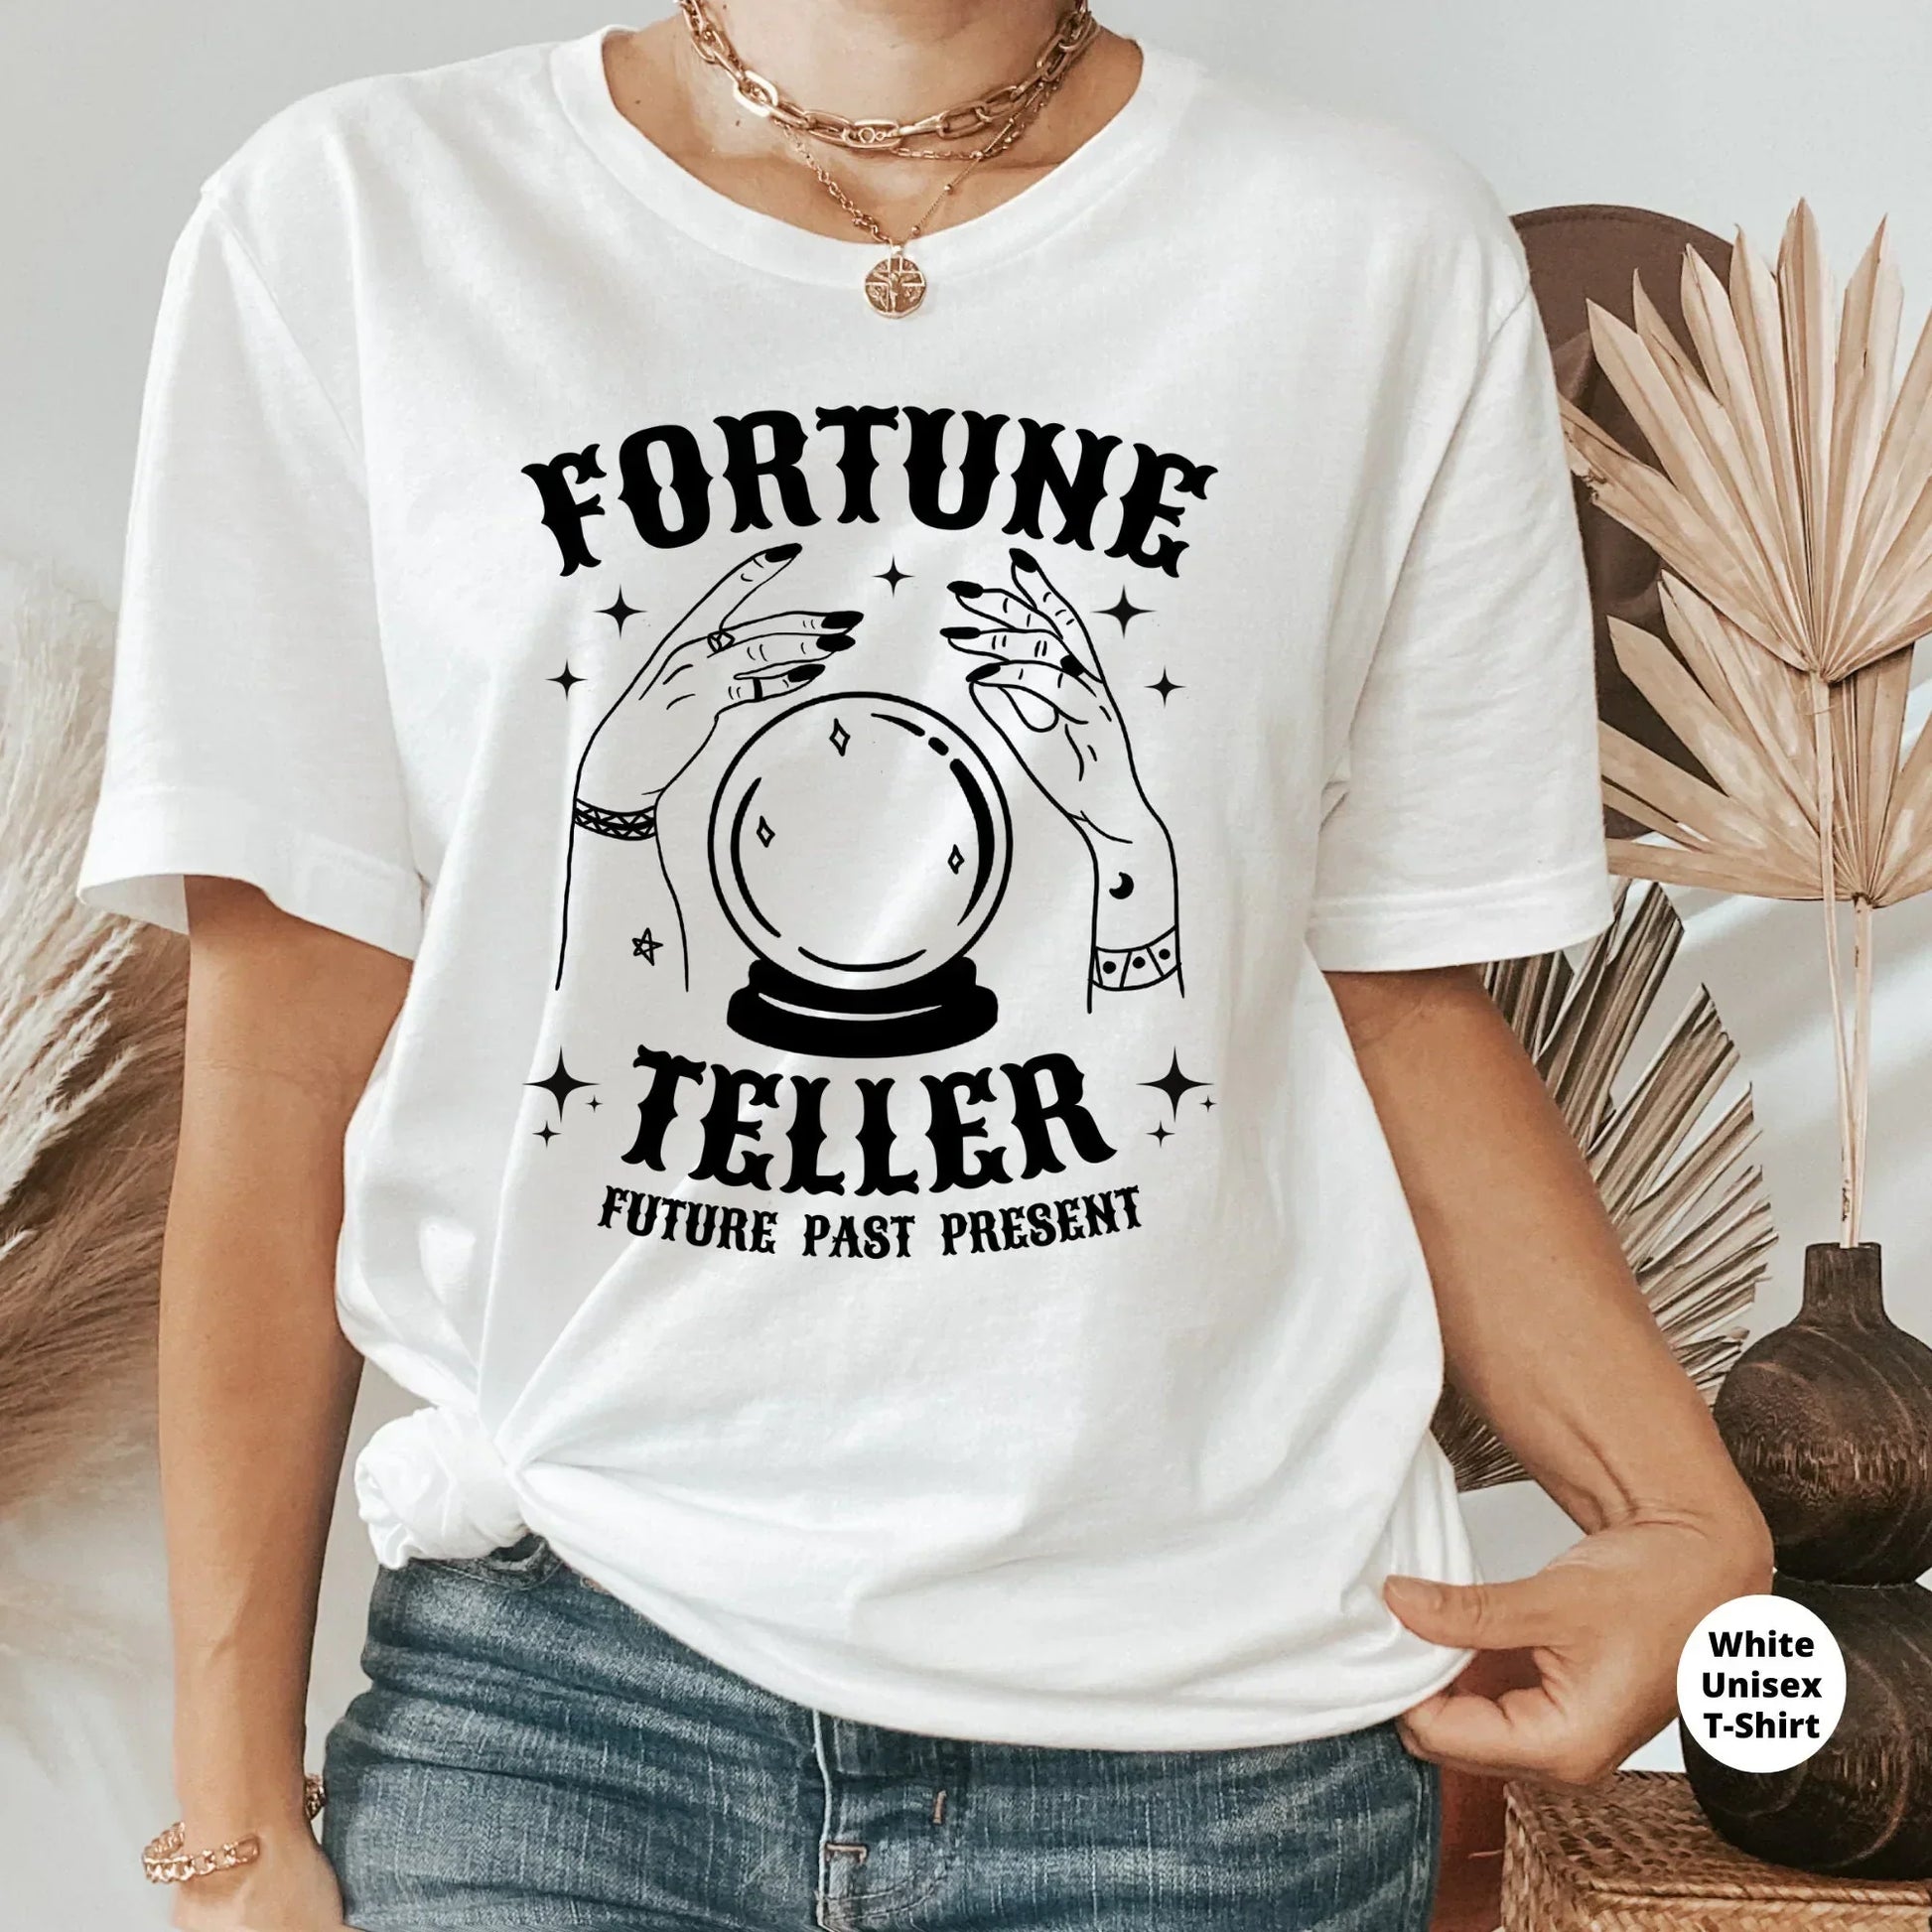 Fortune Teller Shirt, Witch T-Shirt, Moon Child Sweatshirt, Gypsy Tshirt, Psychic, Vintage, Tarot Card Hoodie, Readings, Mystical Shirt HMDesignStudioUS